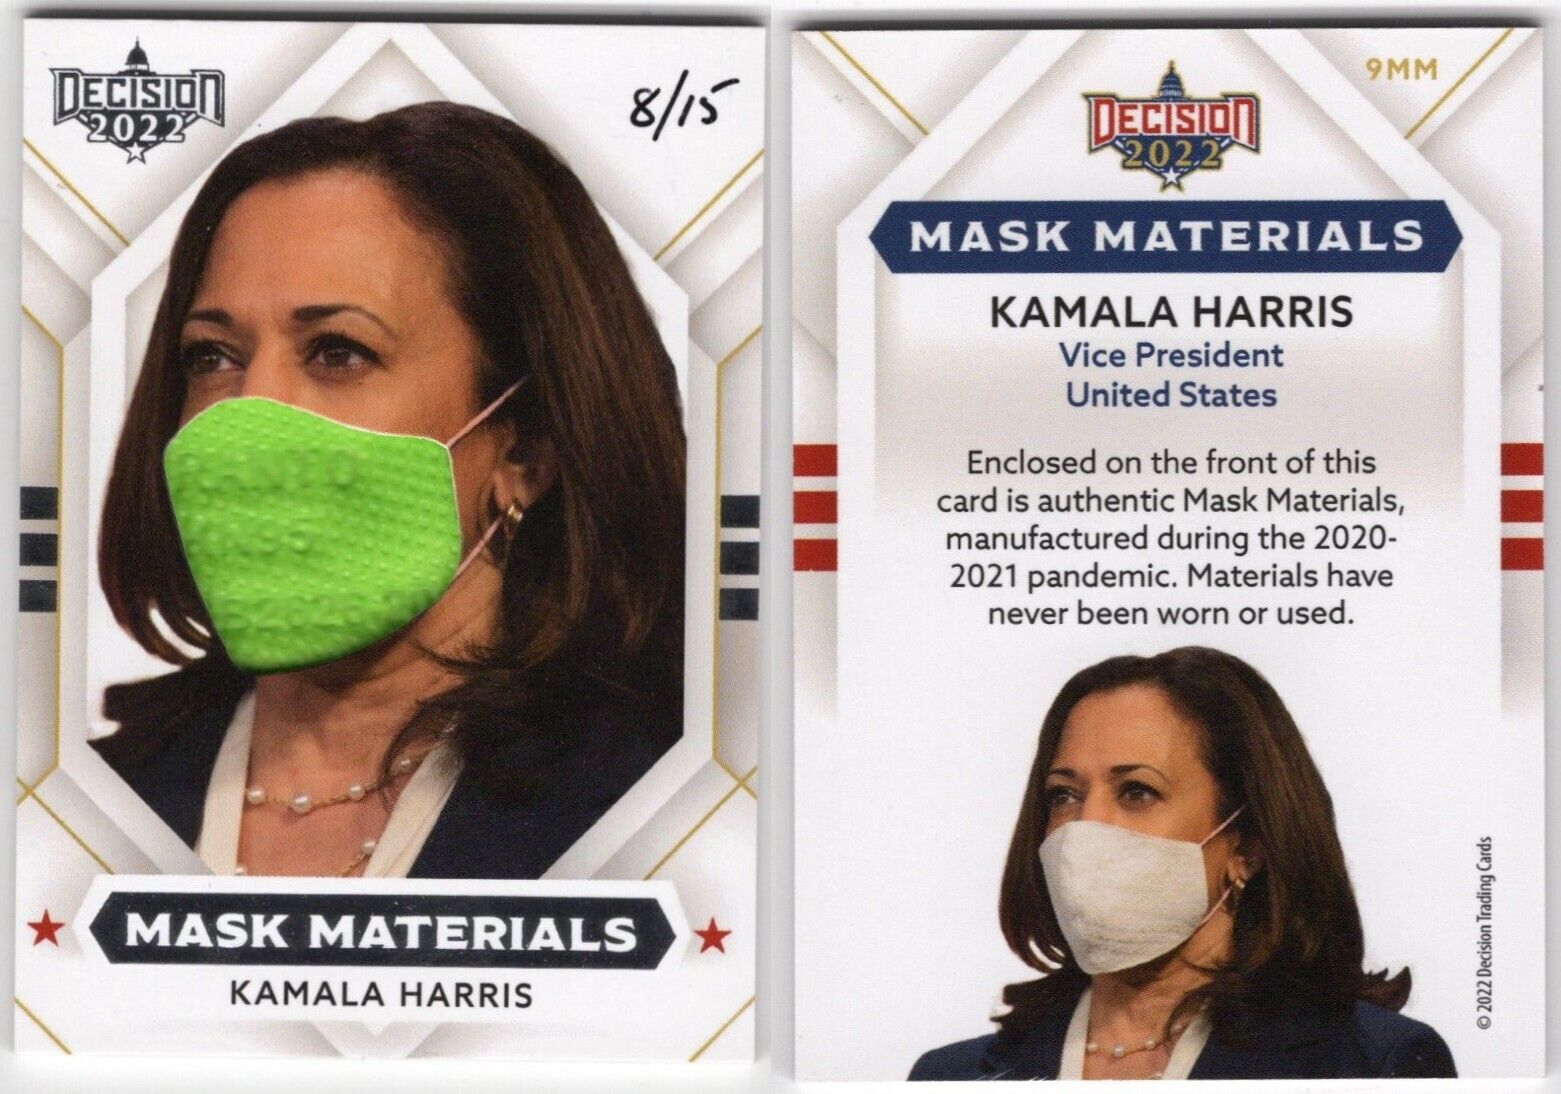 KAMALA HARRIS DECISION 2022 MASK MATERIALS RELIC CARD 9MM  SER# 8/15